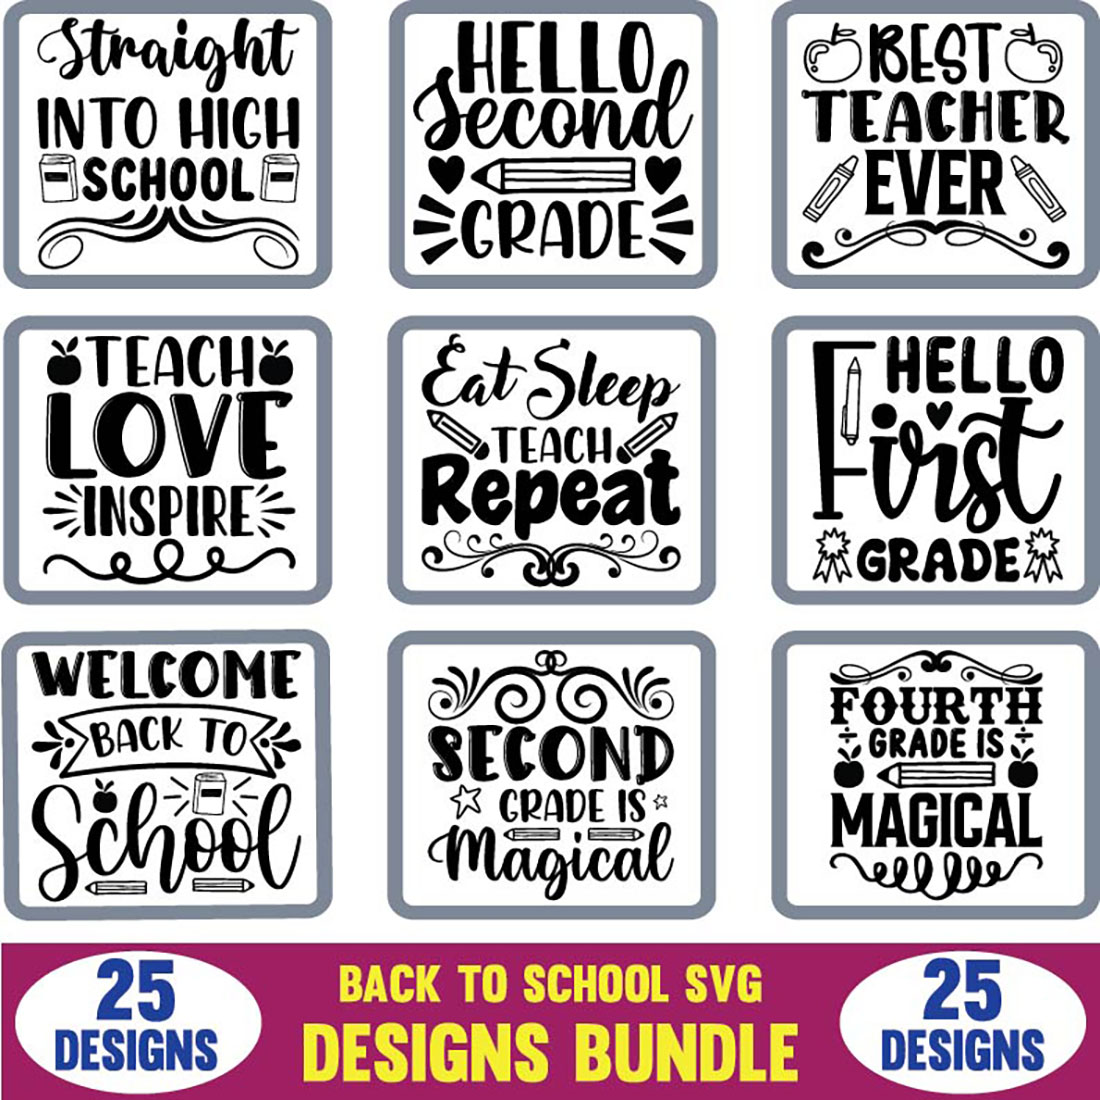 Back To School SVG Designs Bundle main cover